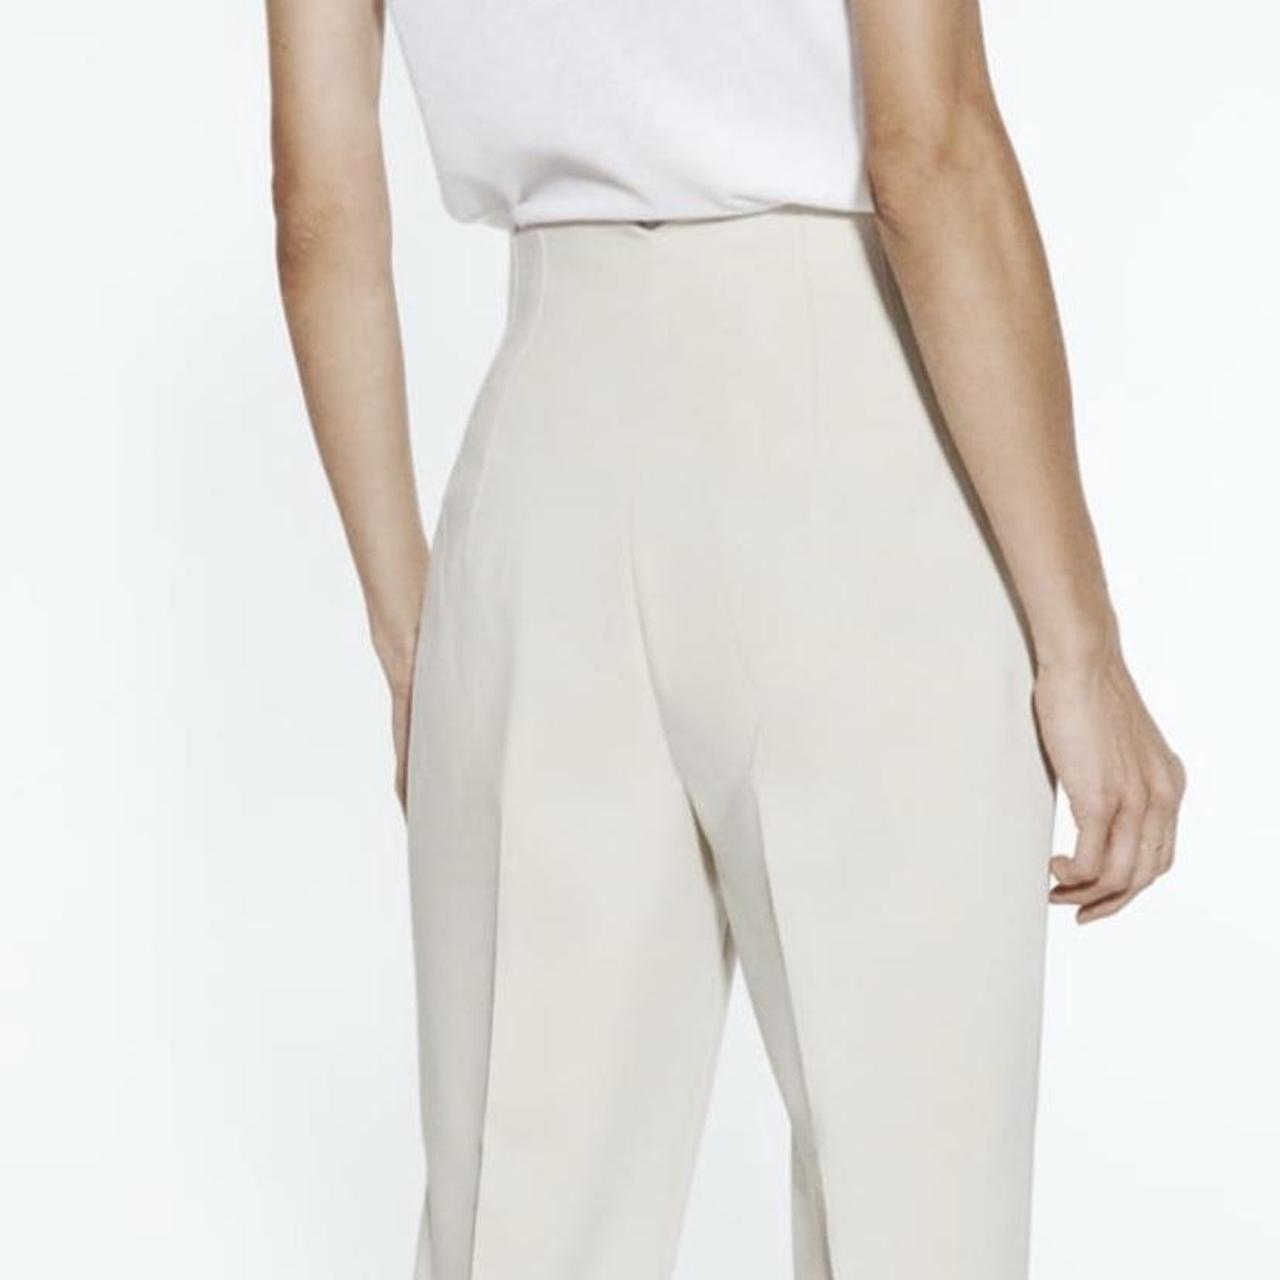 Zara, Pants & Jumpsuits, Zara High Waisted Oyster White Pants